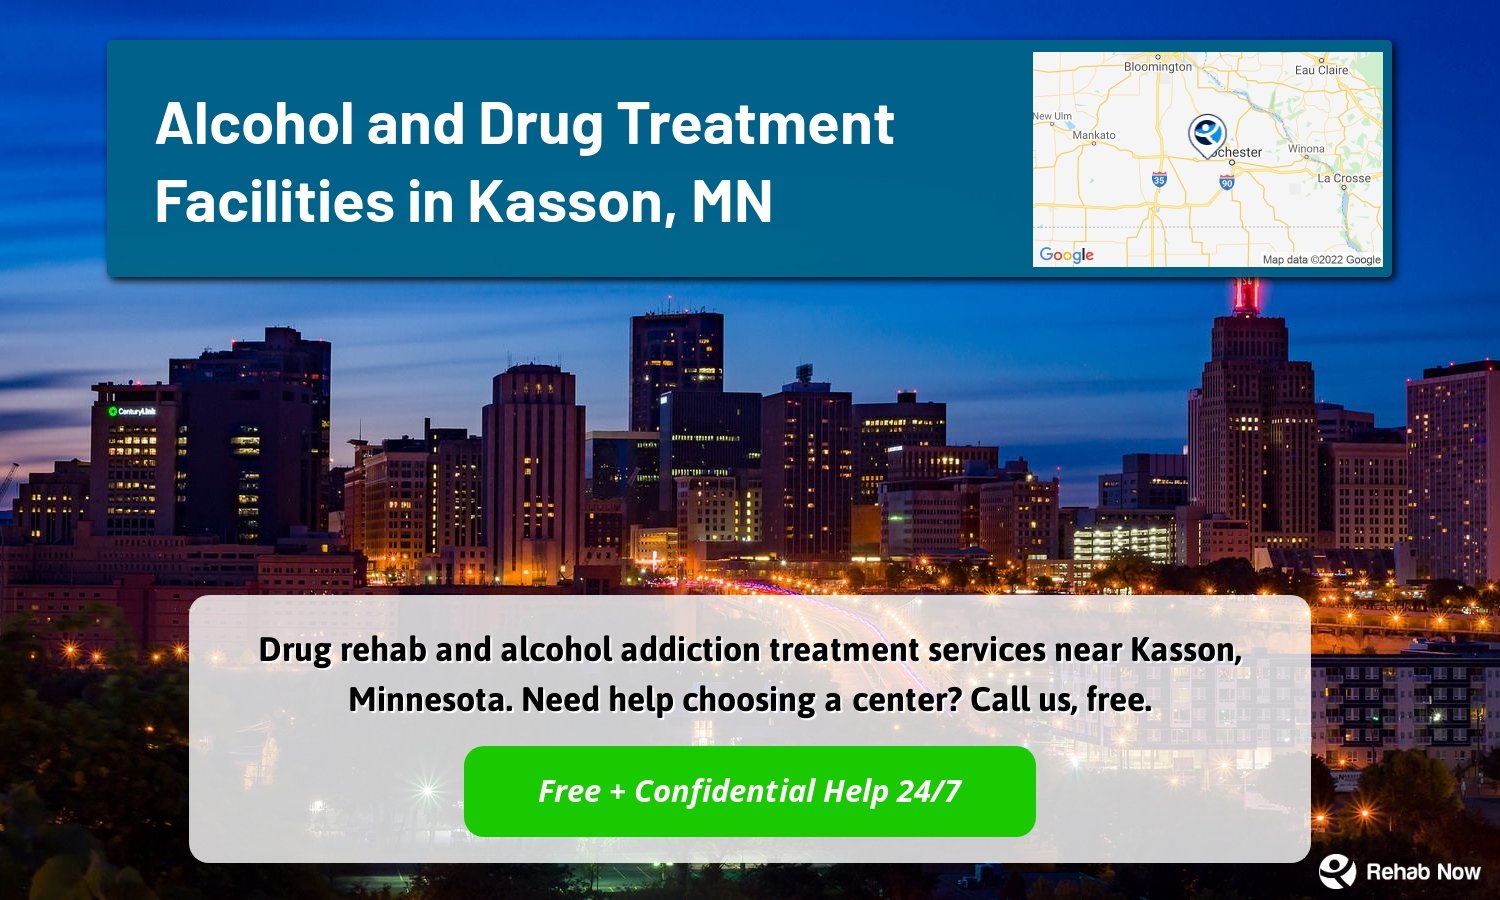 Drug rehab and alcohol addiction treatment services near Kasson, Minnesota. Need help choosing a center? Call us, free.